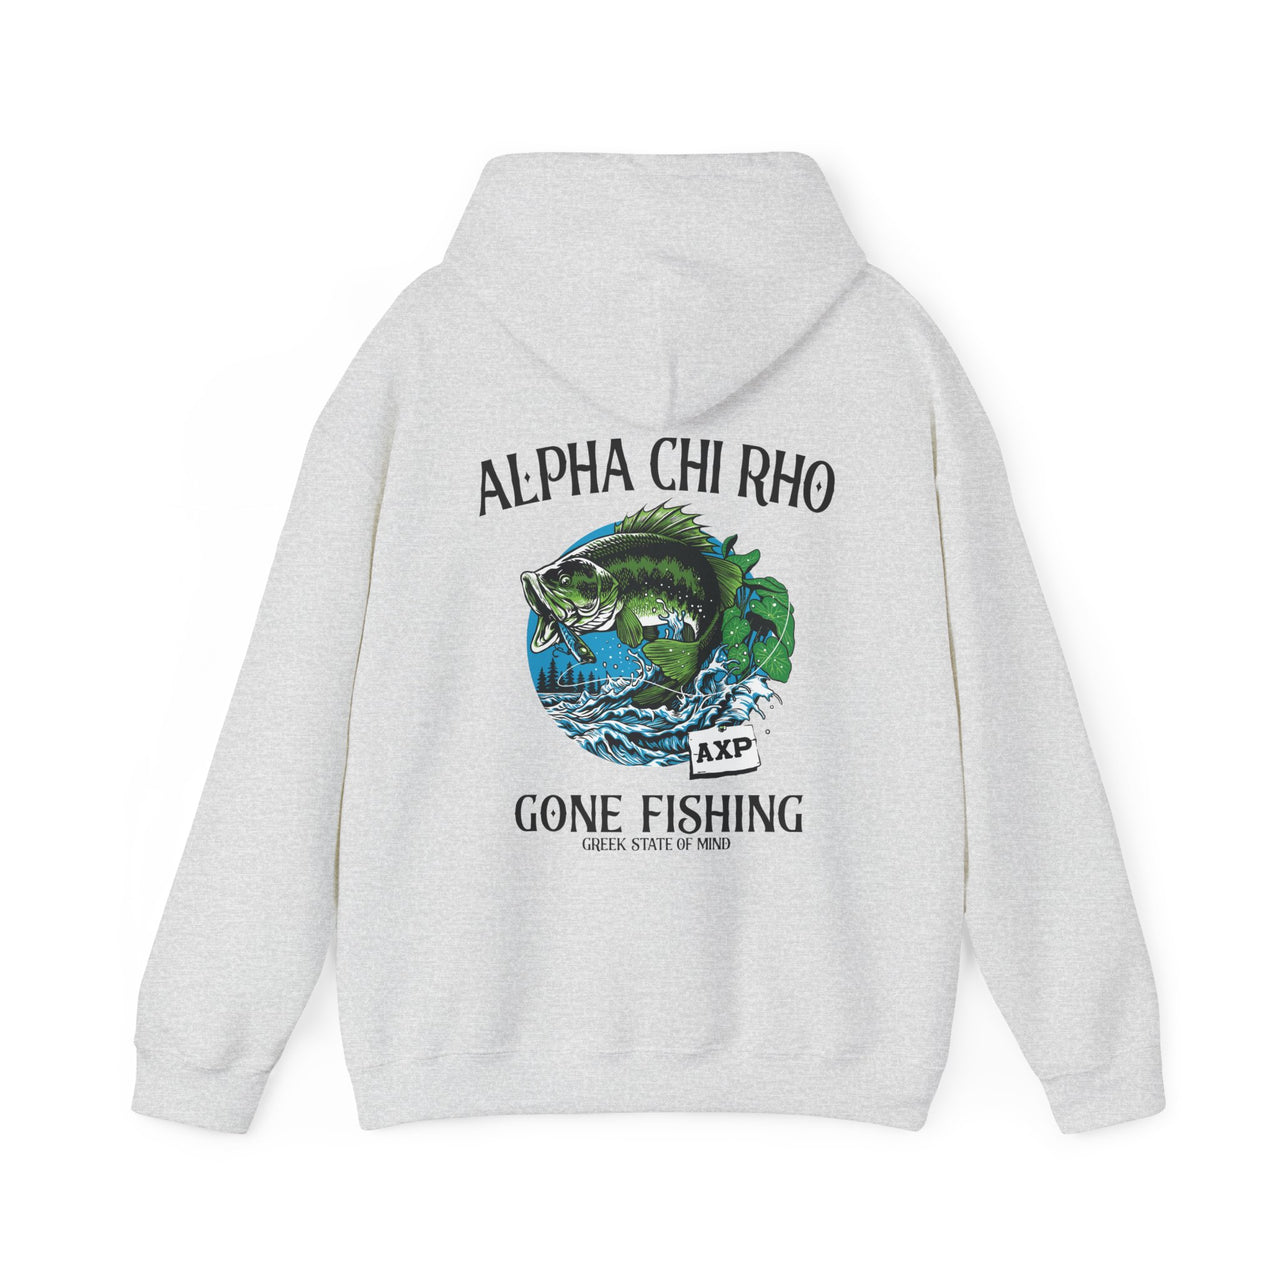 Alpha Chi Rho Graphic Hoodie | Gone Fishing